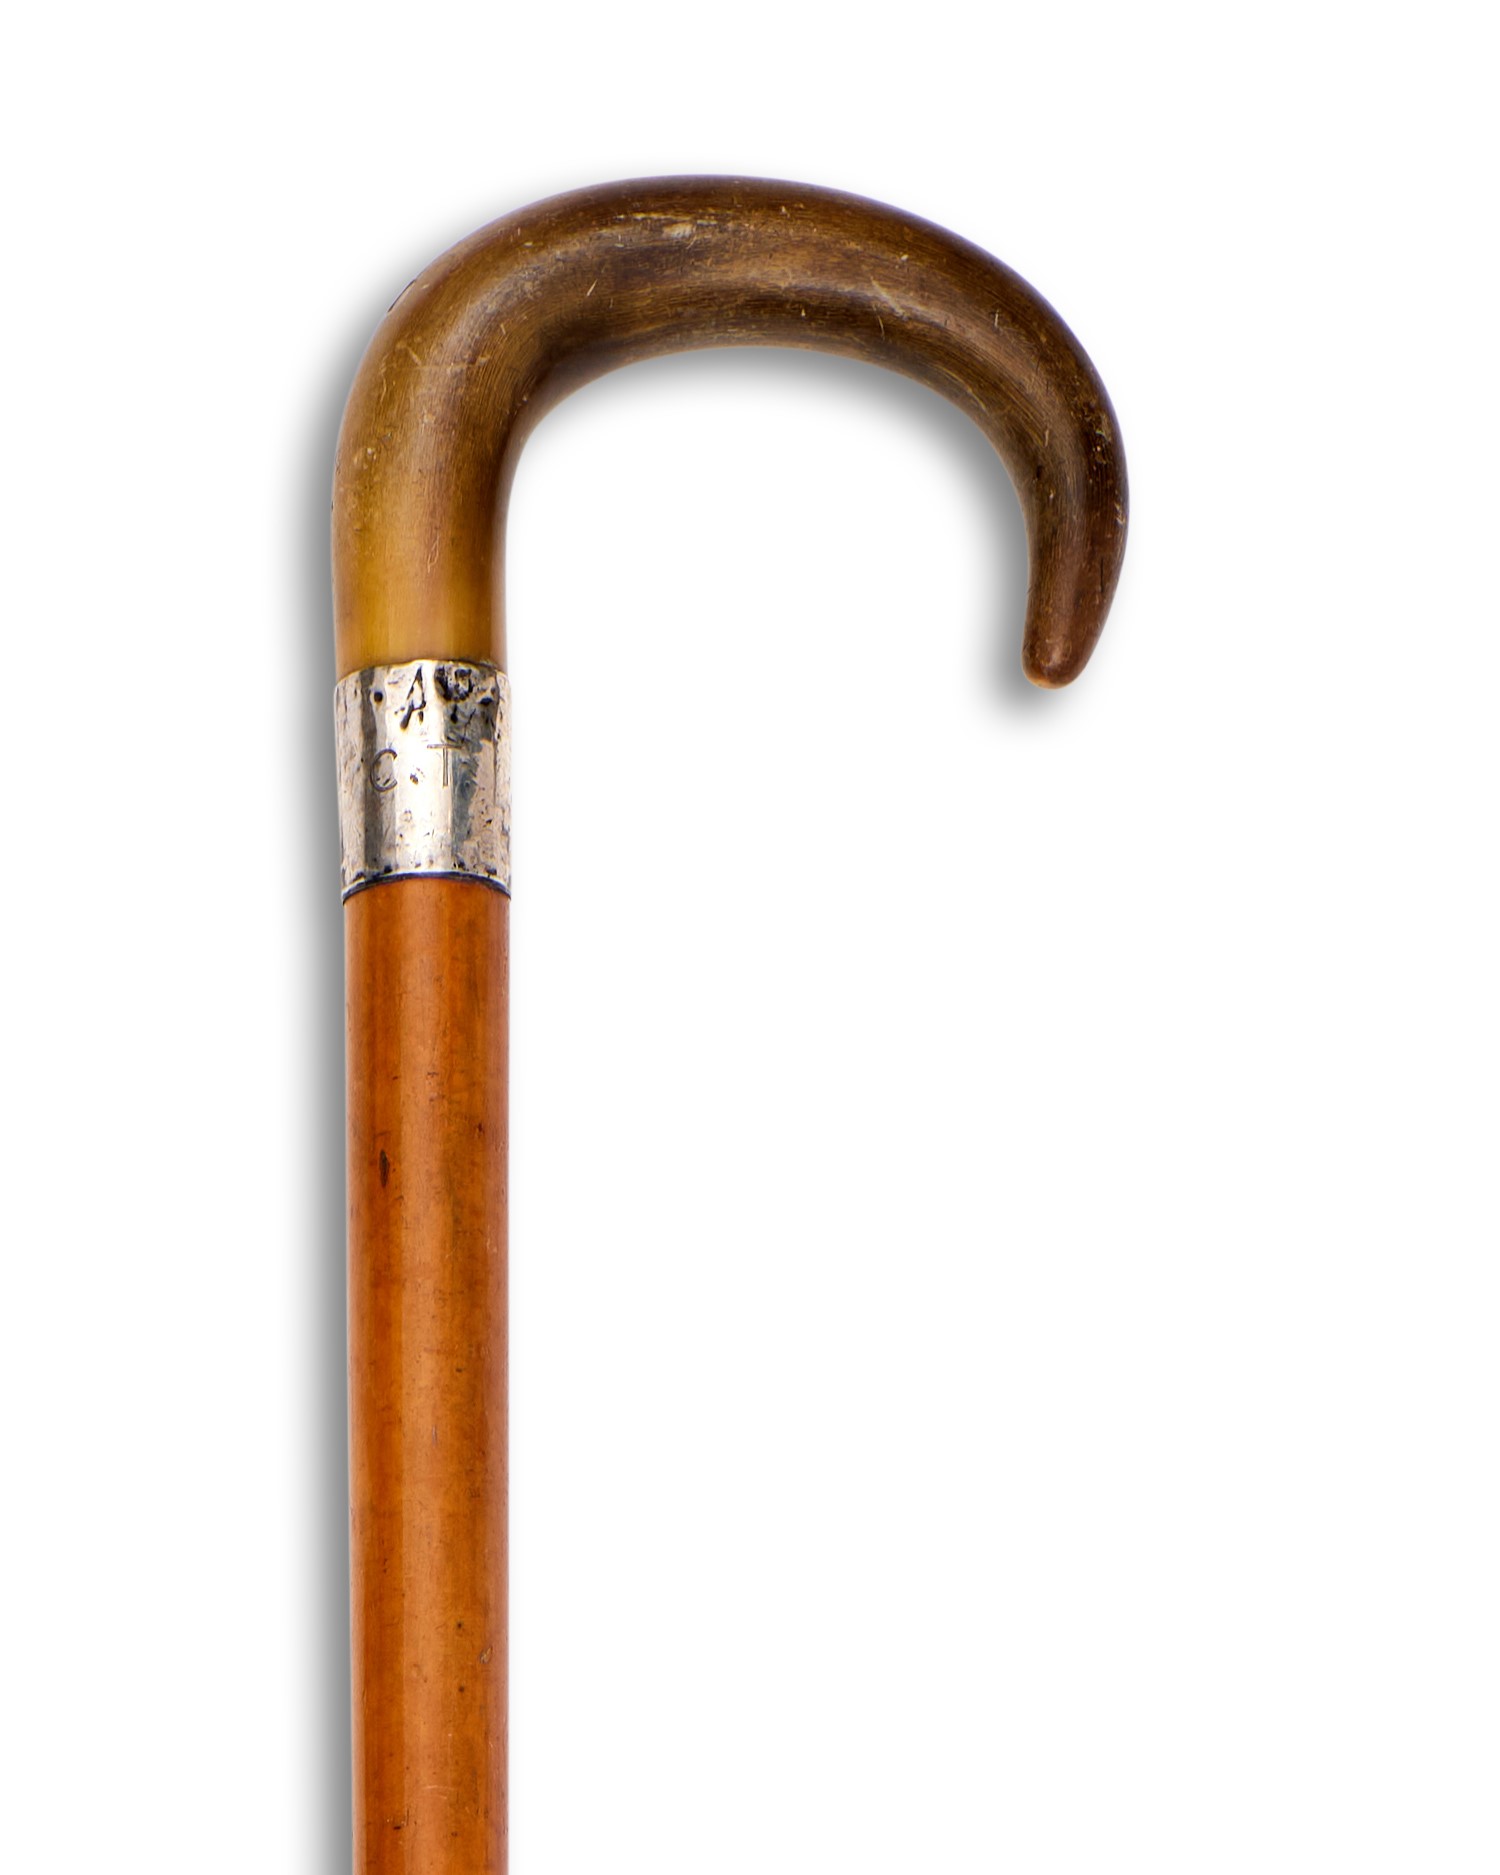 A RHINOCEROS HORN HANDLED WALKING CANE, EARLY 20TH CENTURY